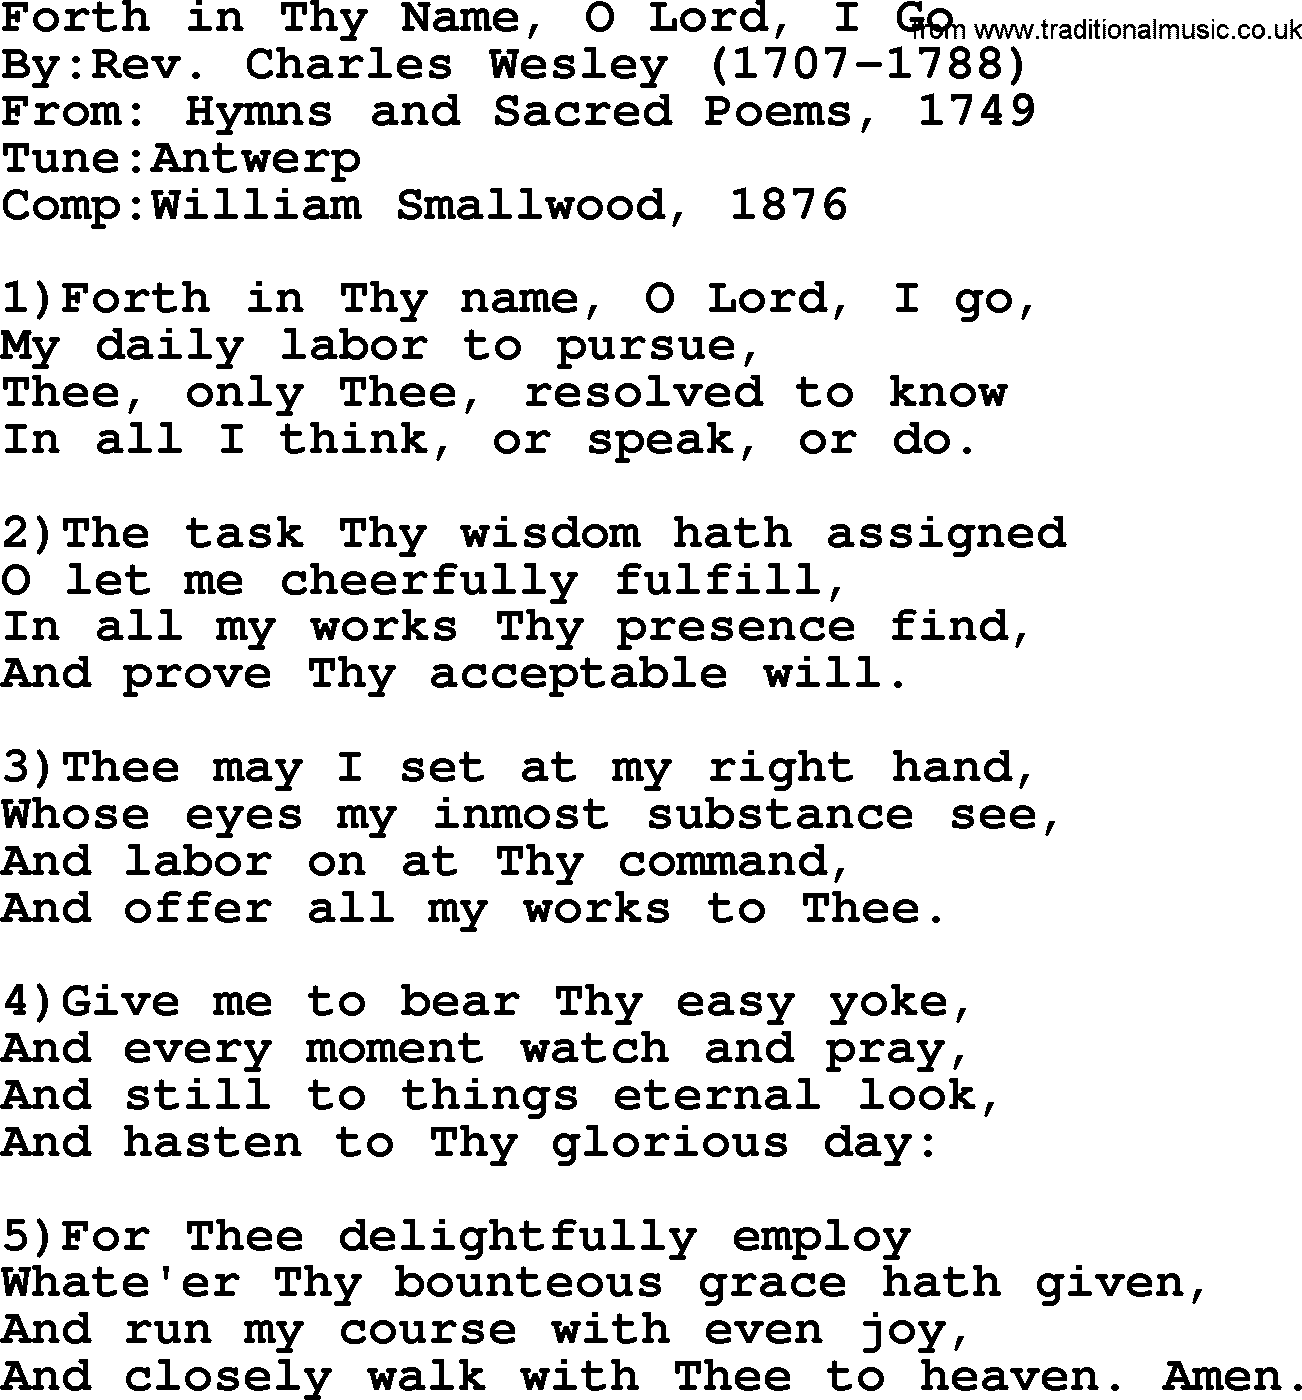 Methodist Hymn: Forth In Thy Name, O Lord, I Go, lyrics